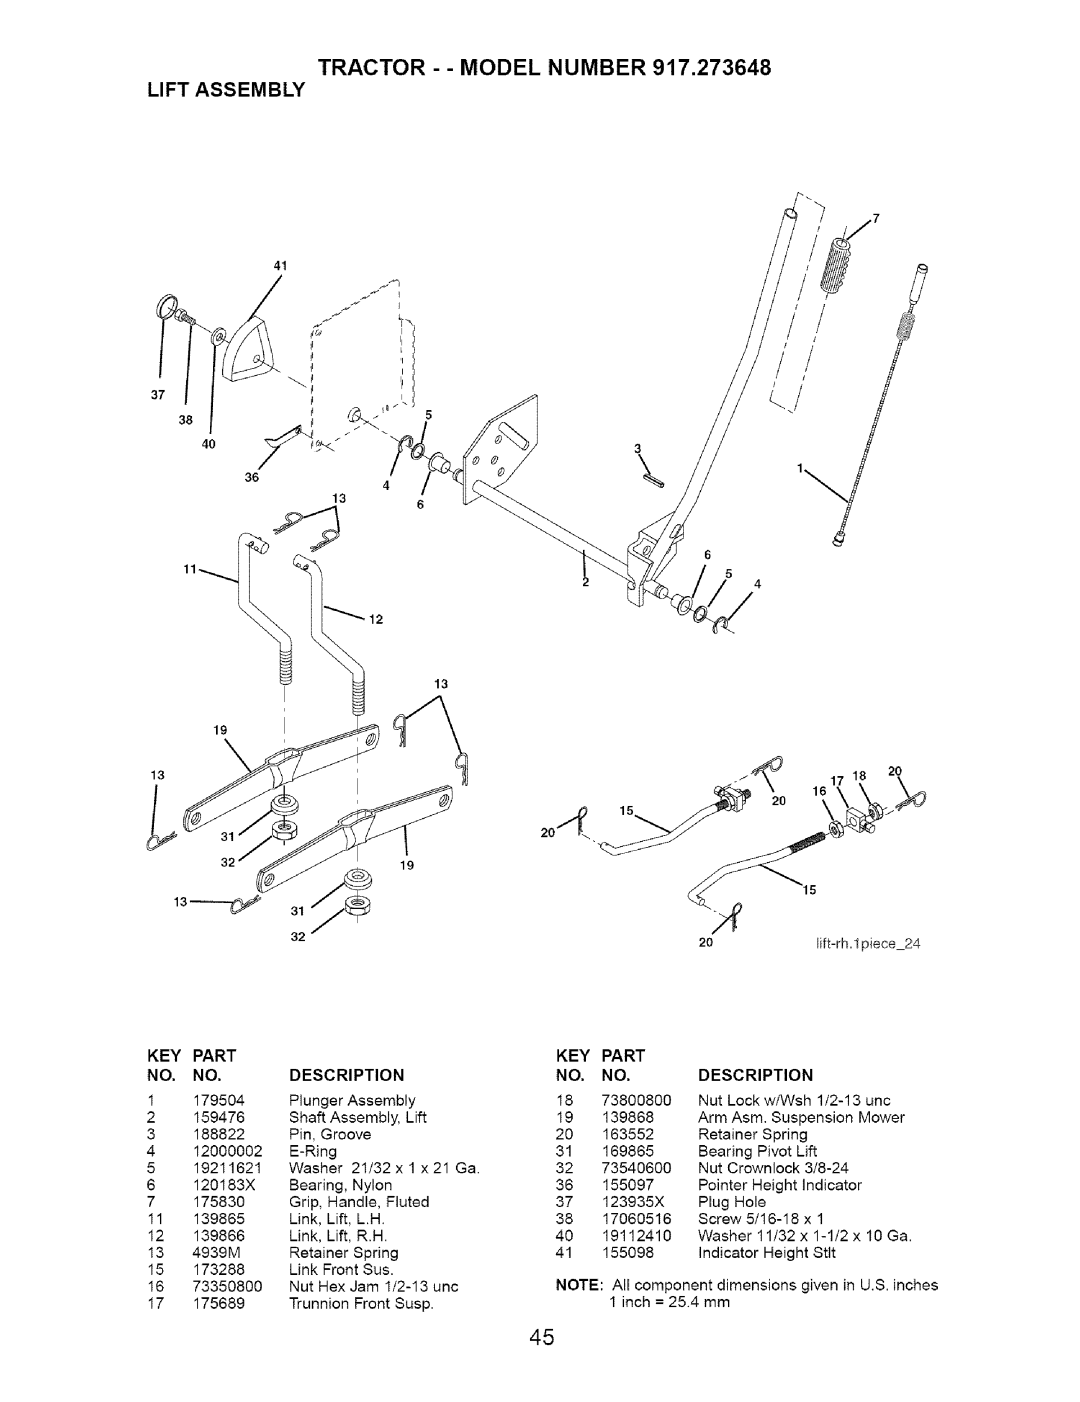 Craftsman 917.273648 manual Ow, TRACTOR - - MODEL NUMBER 917,273648 LIFT ASSEMBLY, Part, Description 